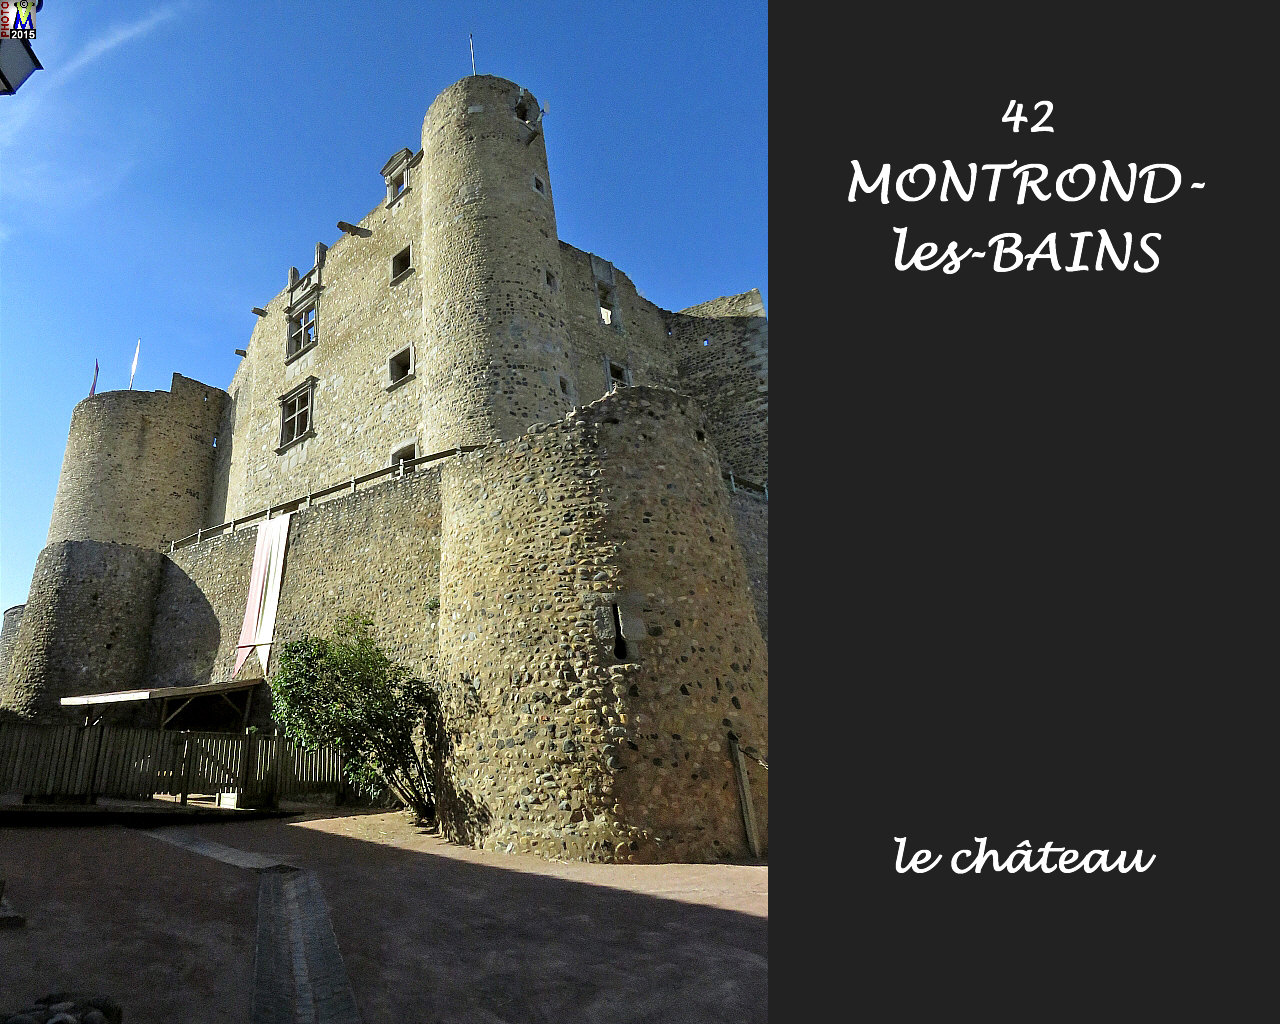 42MONTROND-BAINS_chateau_106.jpg